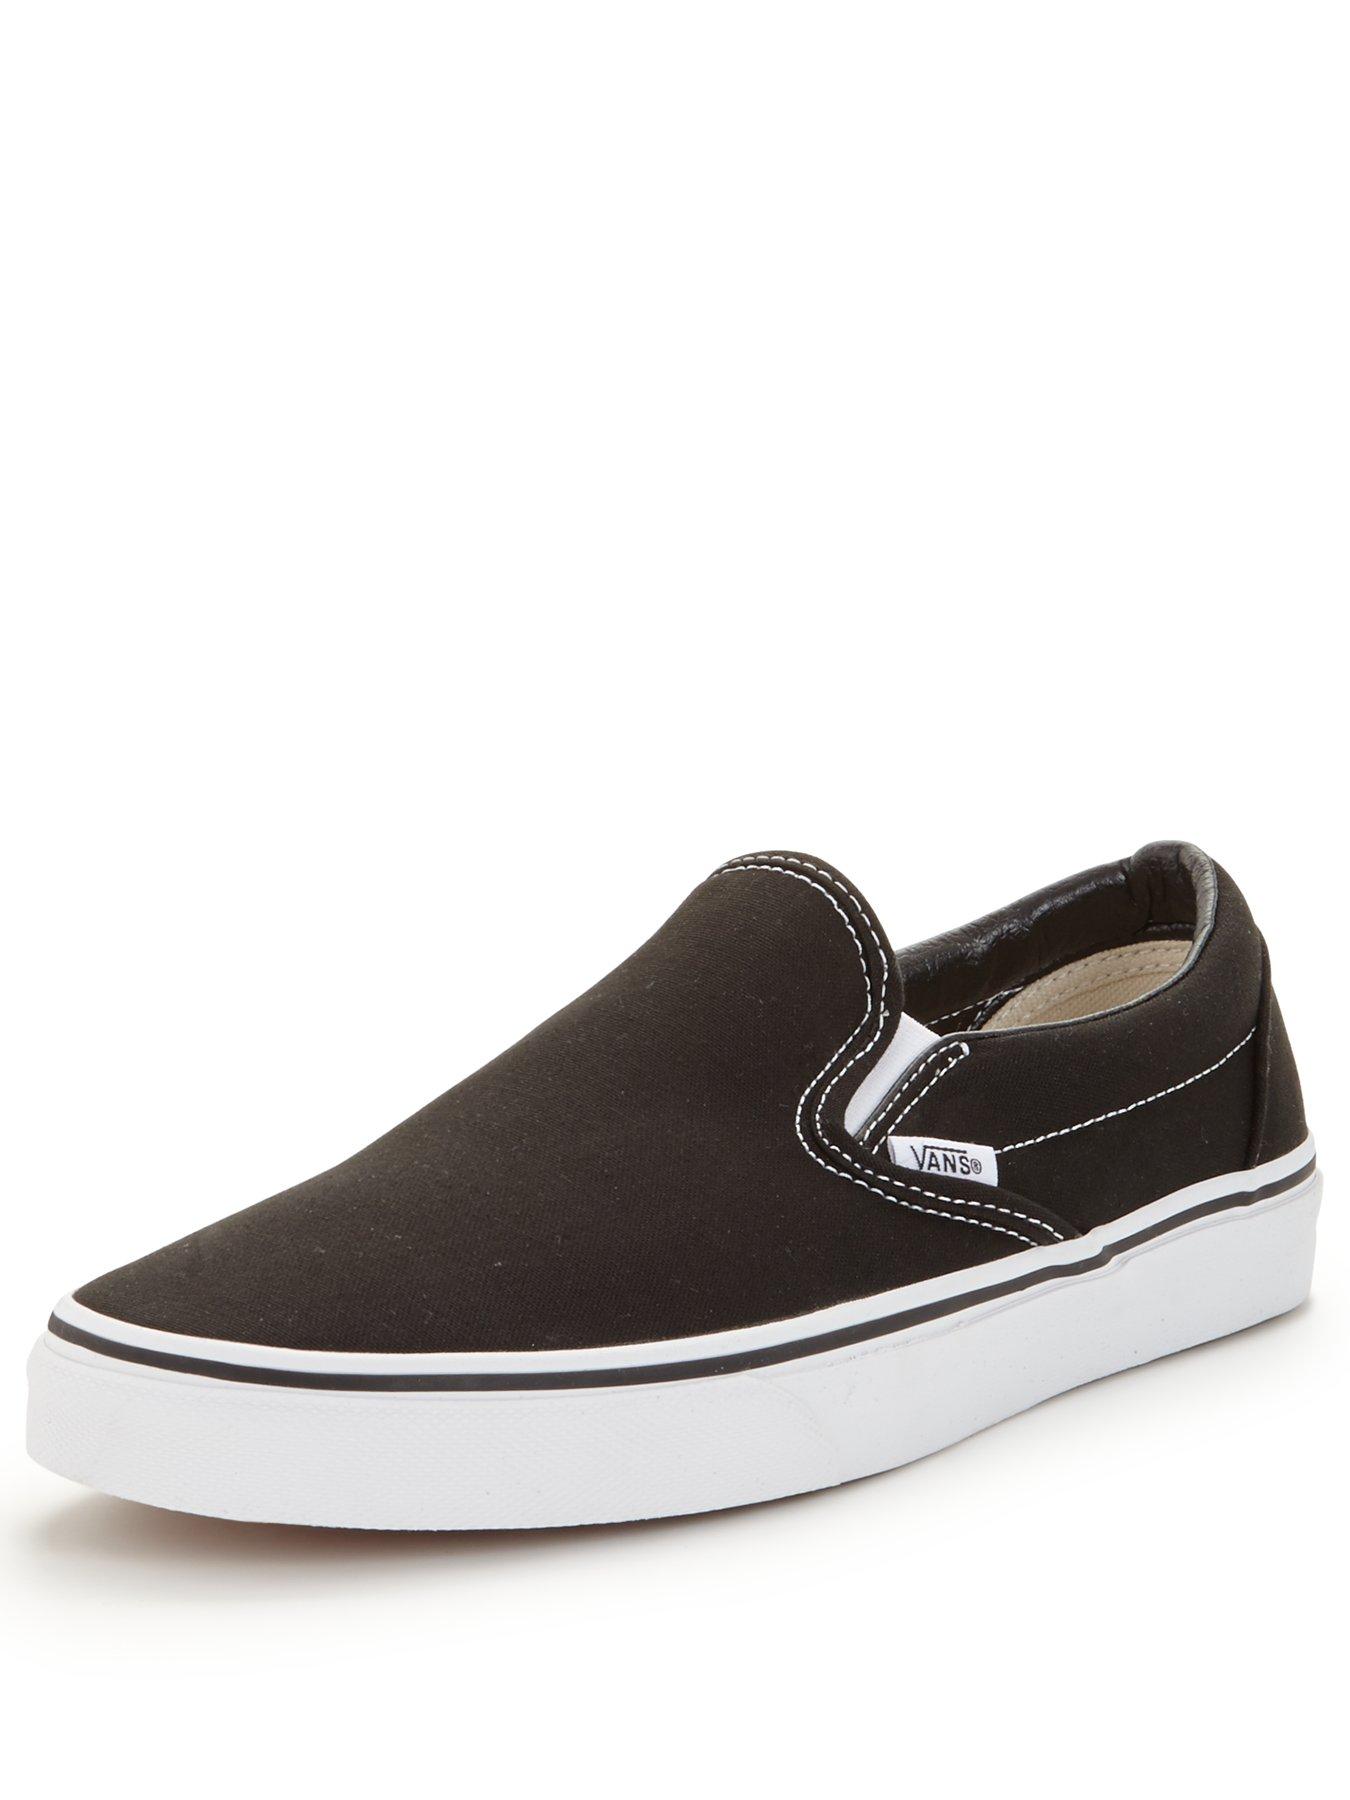 Men's Shoes Details about   VANS AUTHENTIC Black White Canvas Skateboarding Discounted 231 